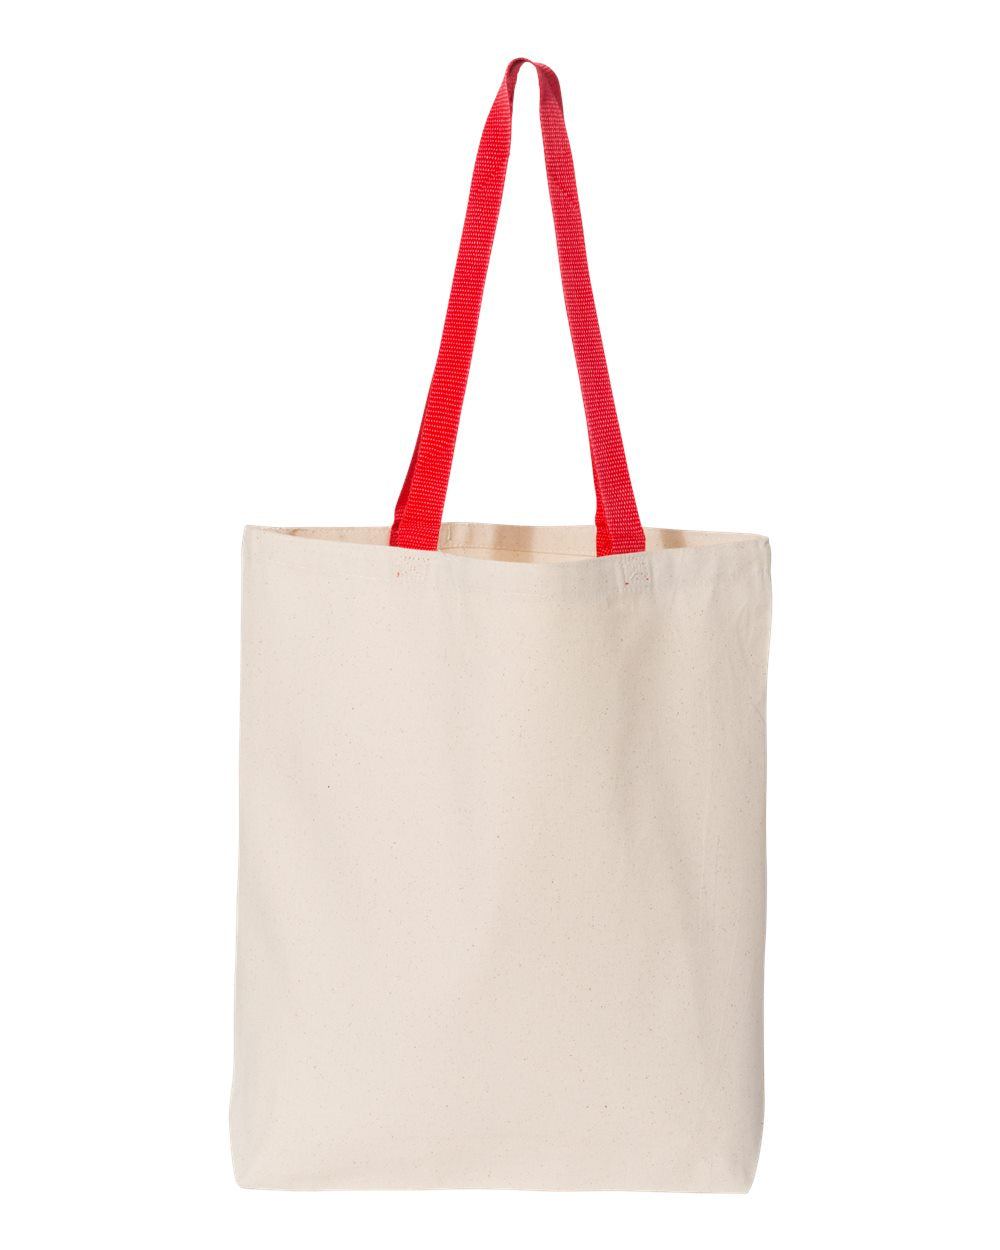 Bulk Blank Tote Bags Canada | Wholesale & Retail - InstaCustoms